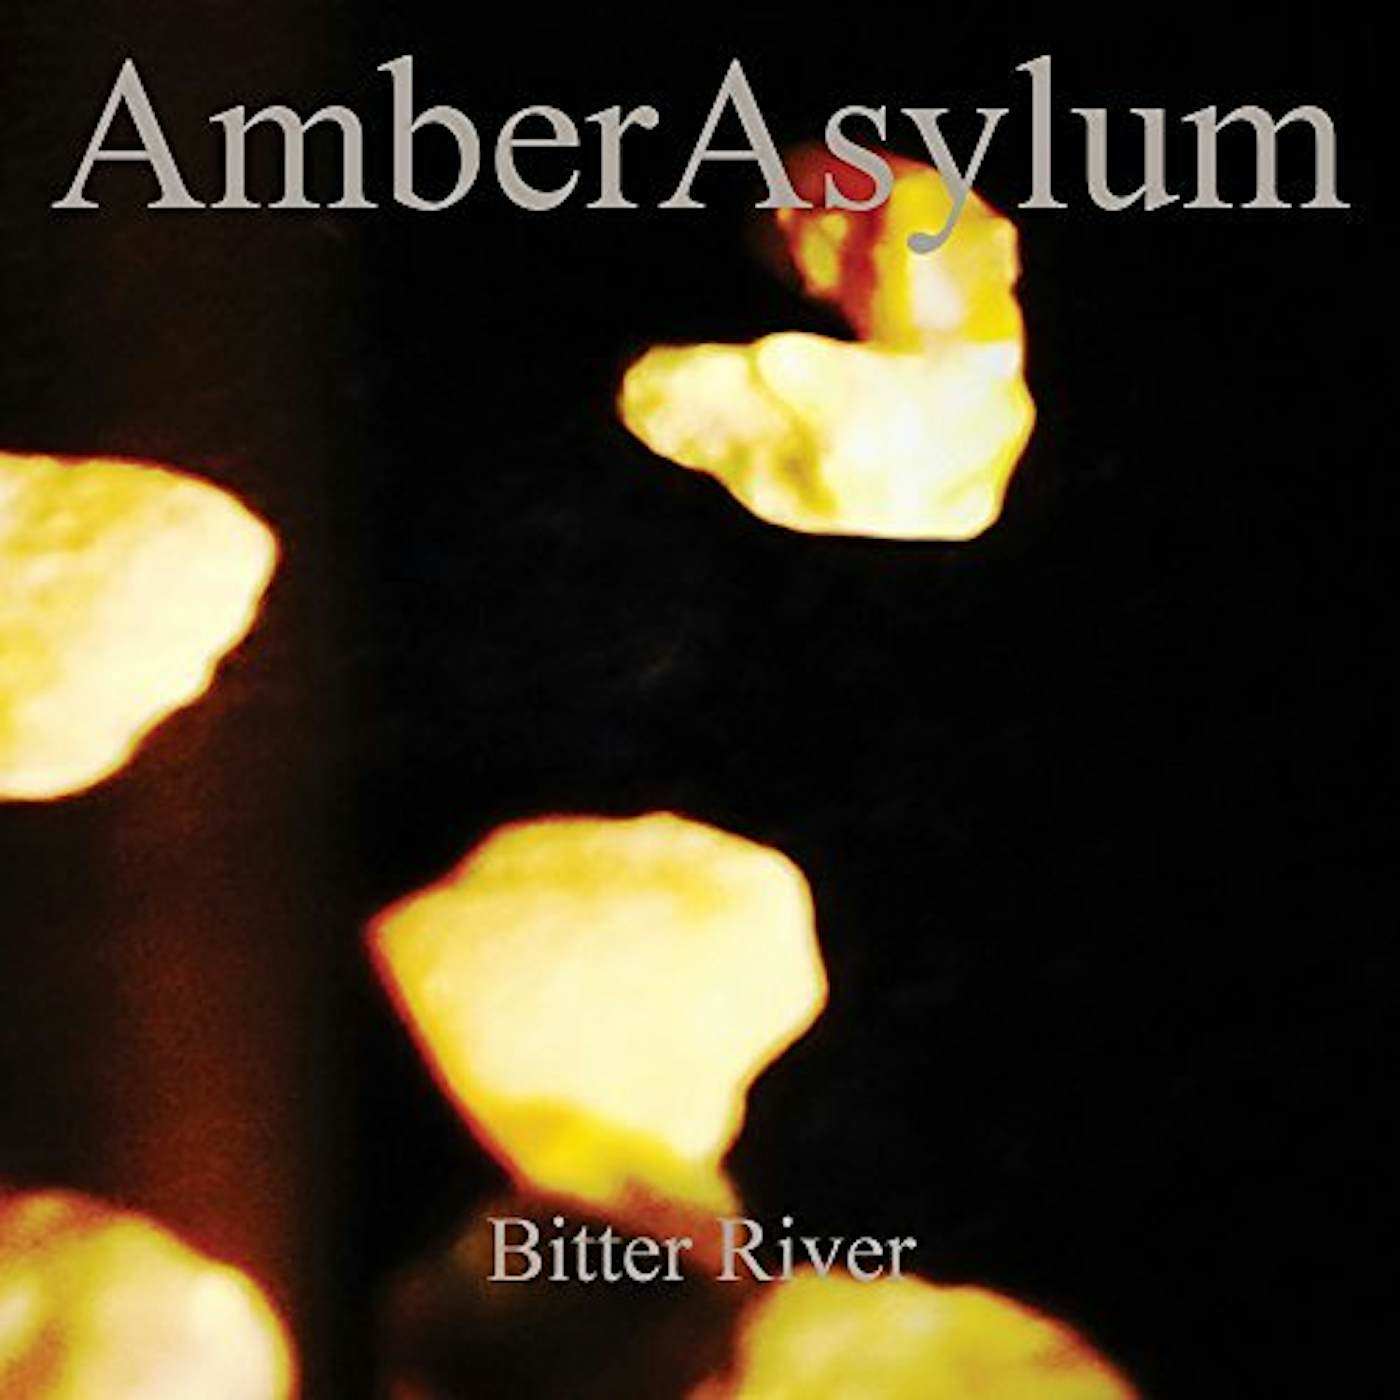 Amber Asylum BITTER RIVER CD